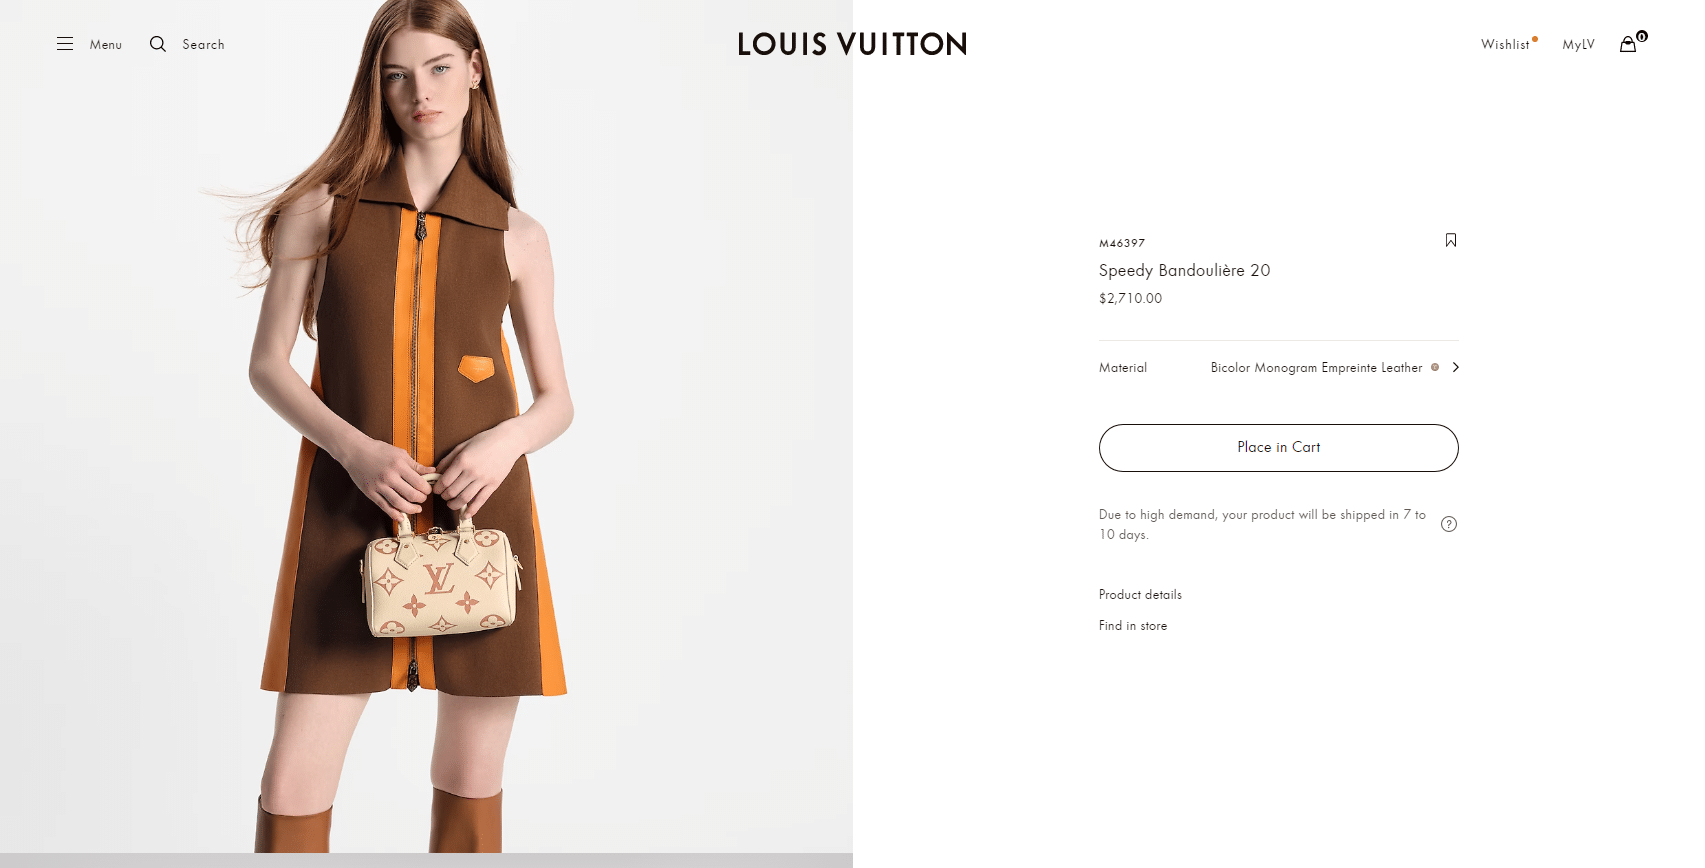 Speedy-Bandouliere-20-Bicolor-Monogram-Empreinte-Leather-Women-Handbags-LOUIS-VUITTON-.png